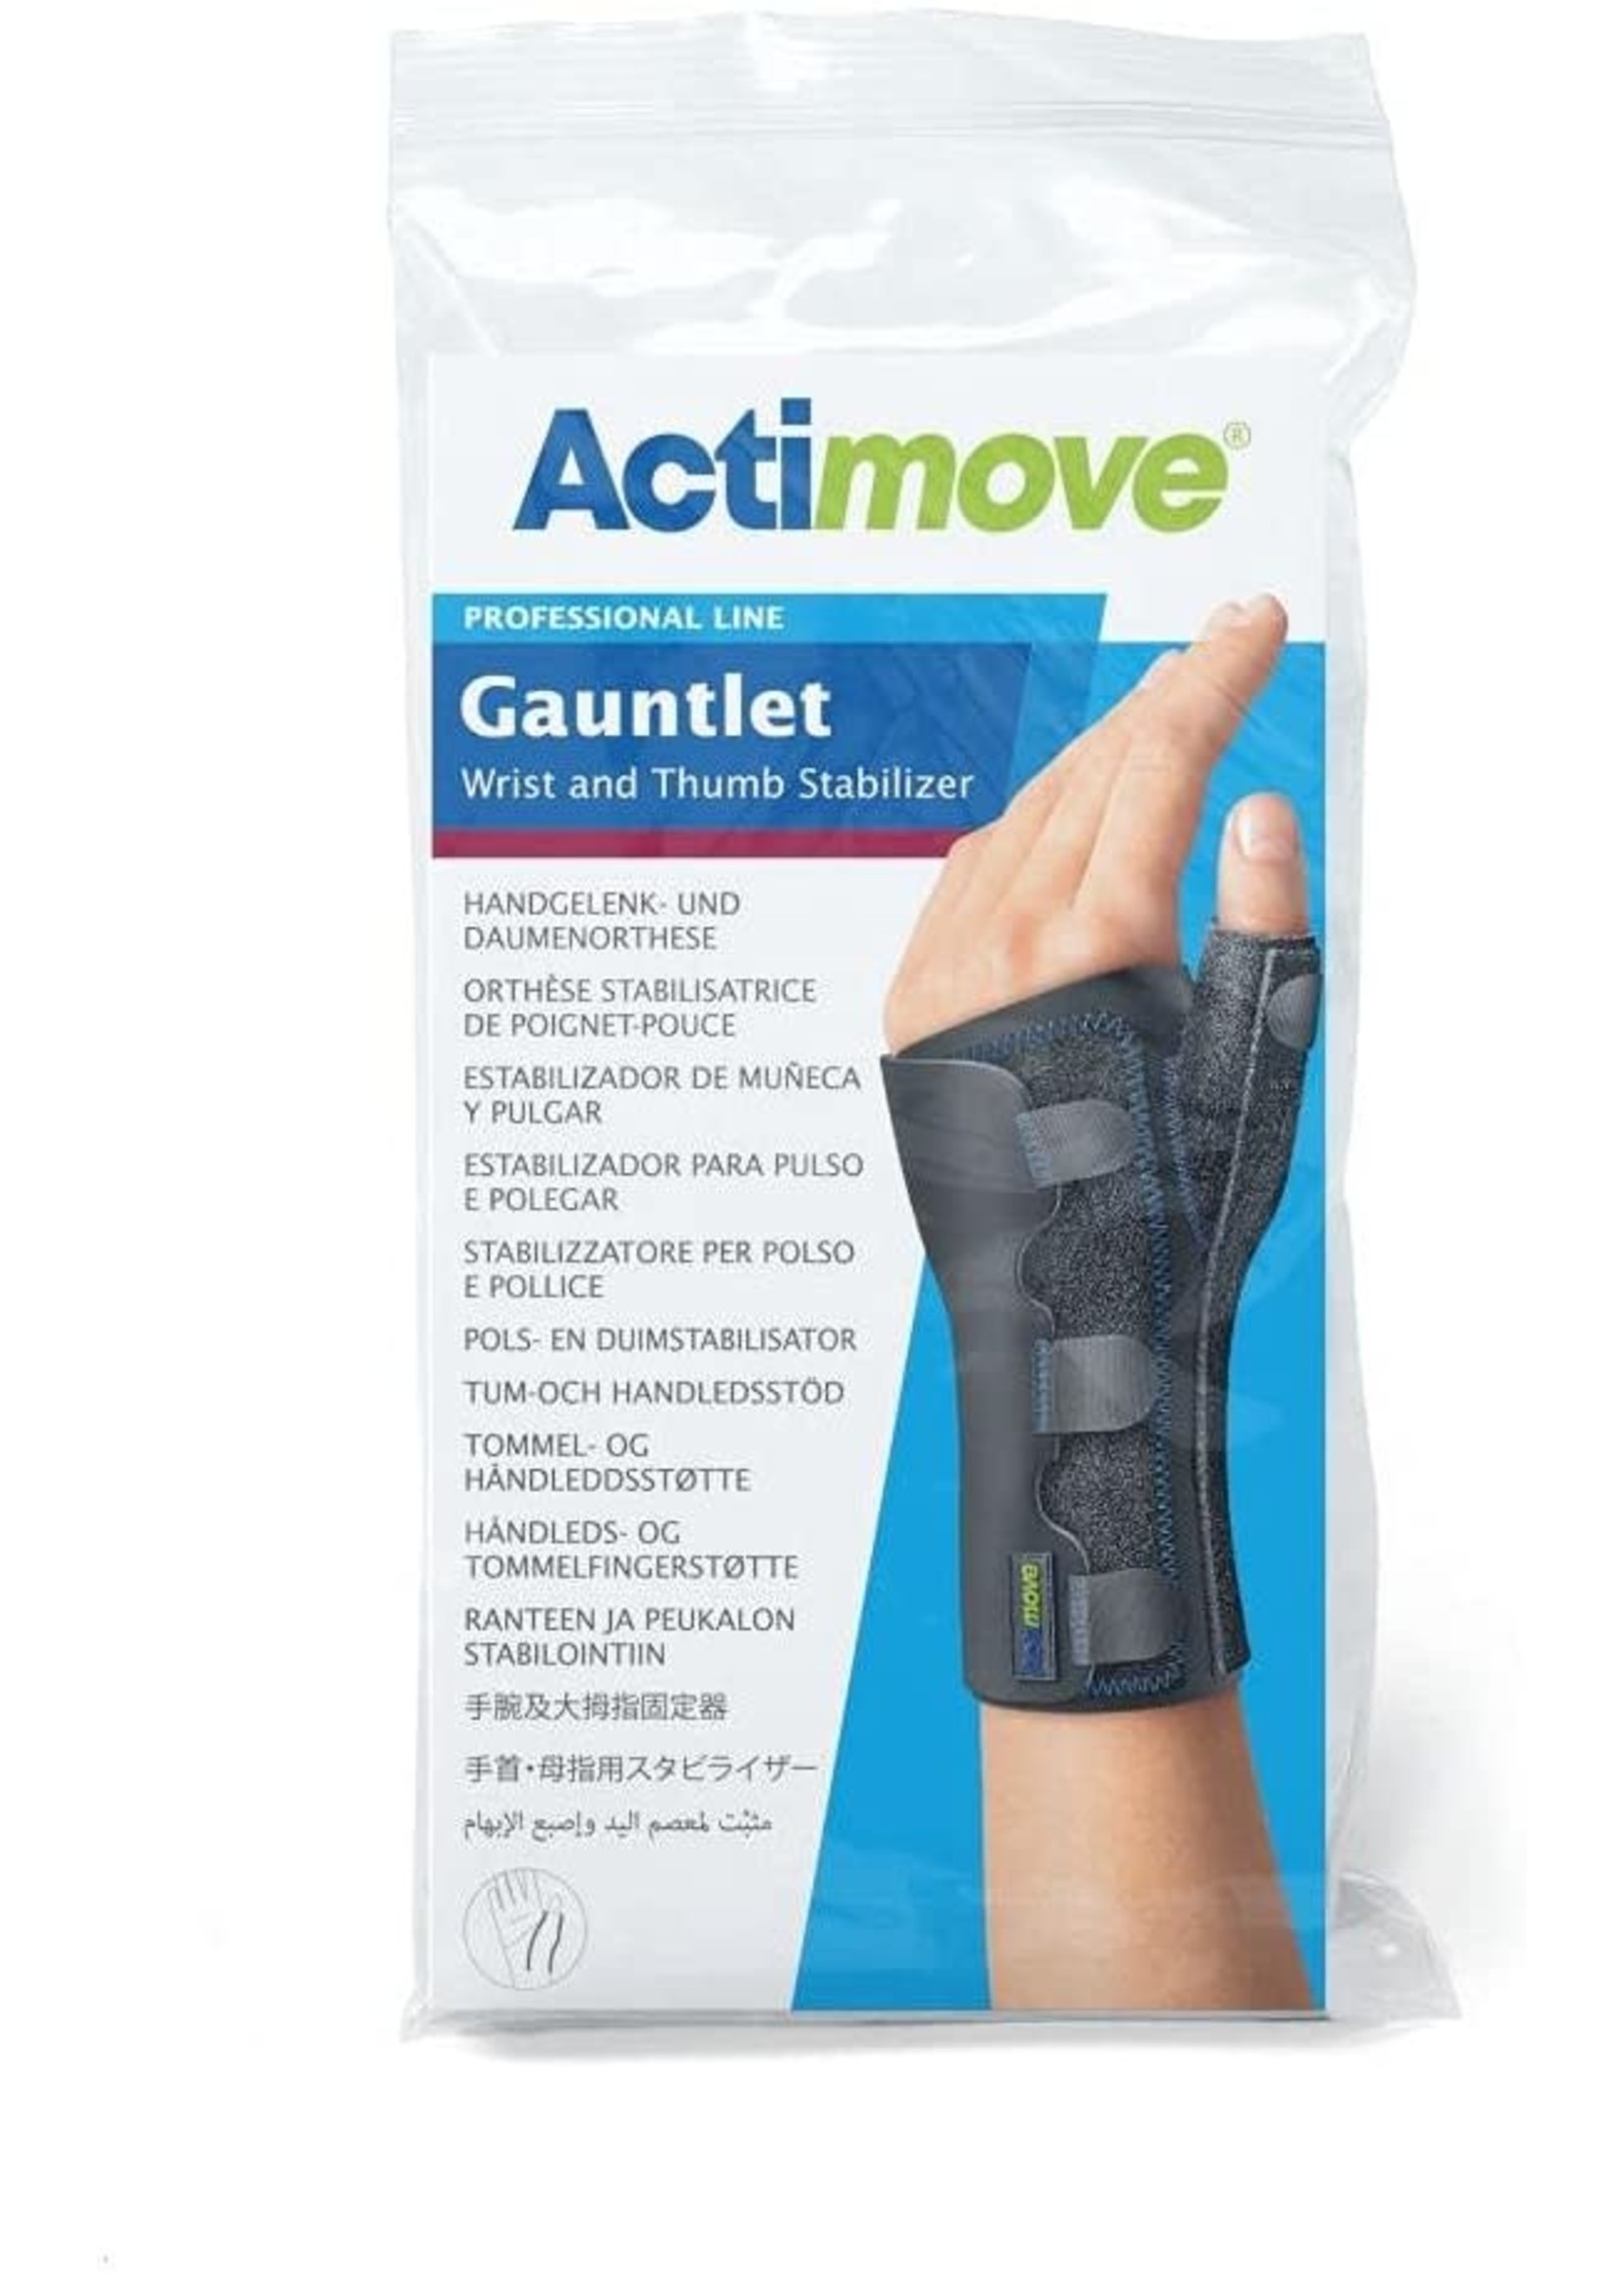 ActiMove Gauntlet Wrist & Thumb Stabilizer